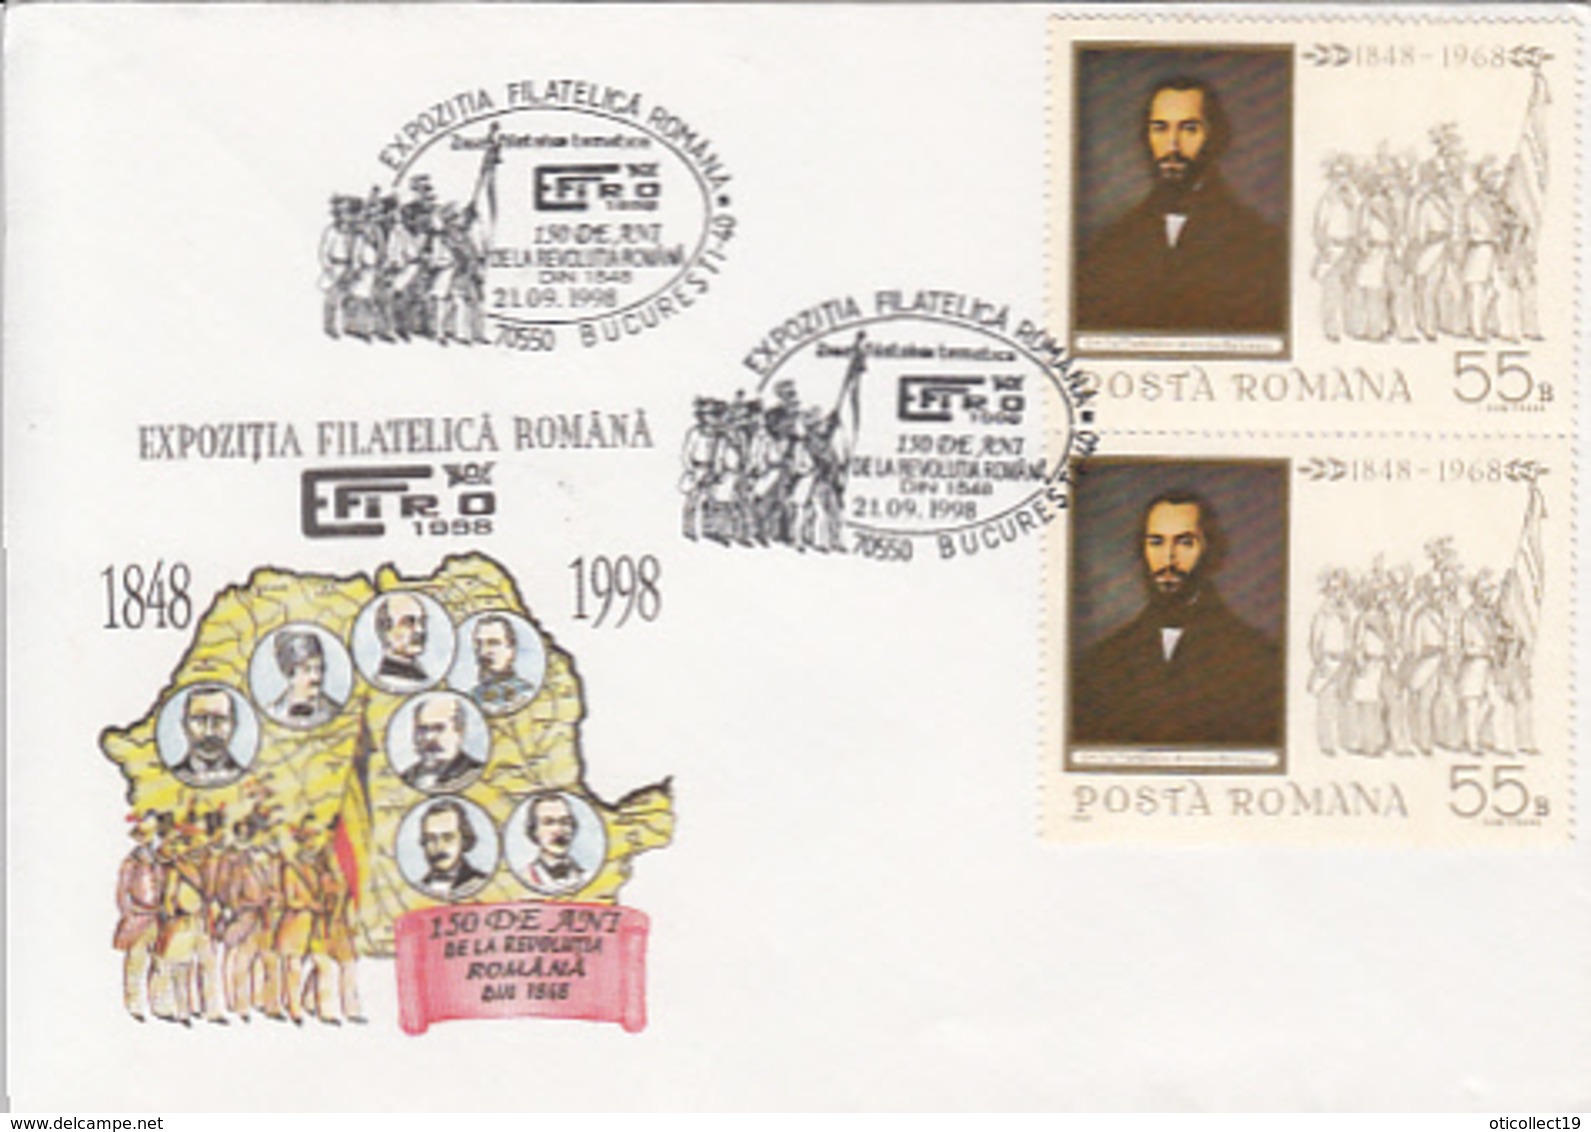 ROMANIAN 1848 REVOLUTION ANNIVERSARY, EFIRO PHILATELIC EXHIBITION, SPECIAL COVER, OVERPRINT STAMP, 1998, ROMANIA - Covers & Documents